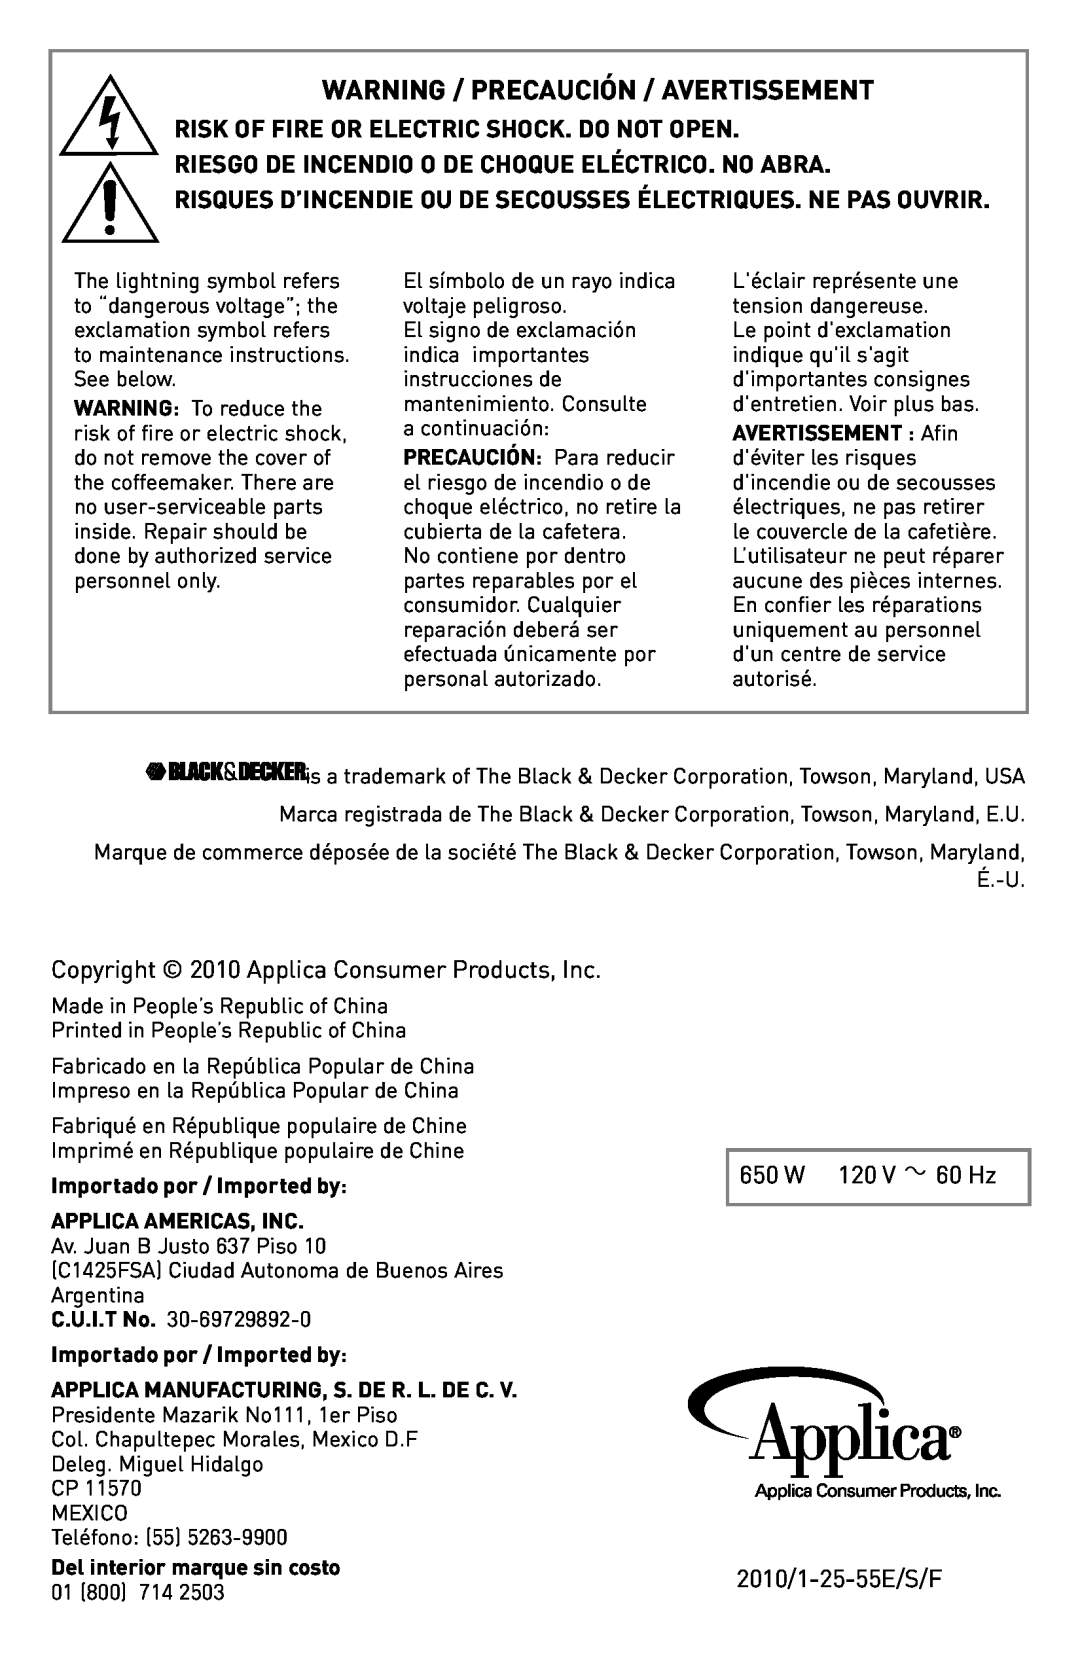 Black & Decker DCM675WF, DCM675BF manual Warning / Precaución / Avertissement, Copyright 2010 Applica Consumer Products, Inc 